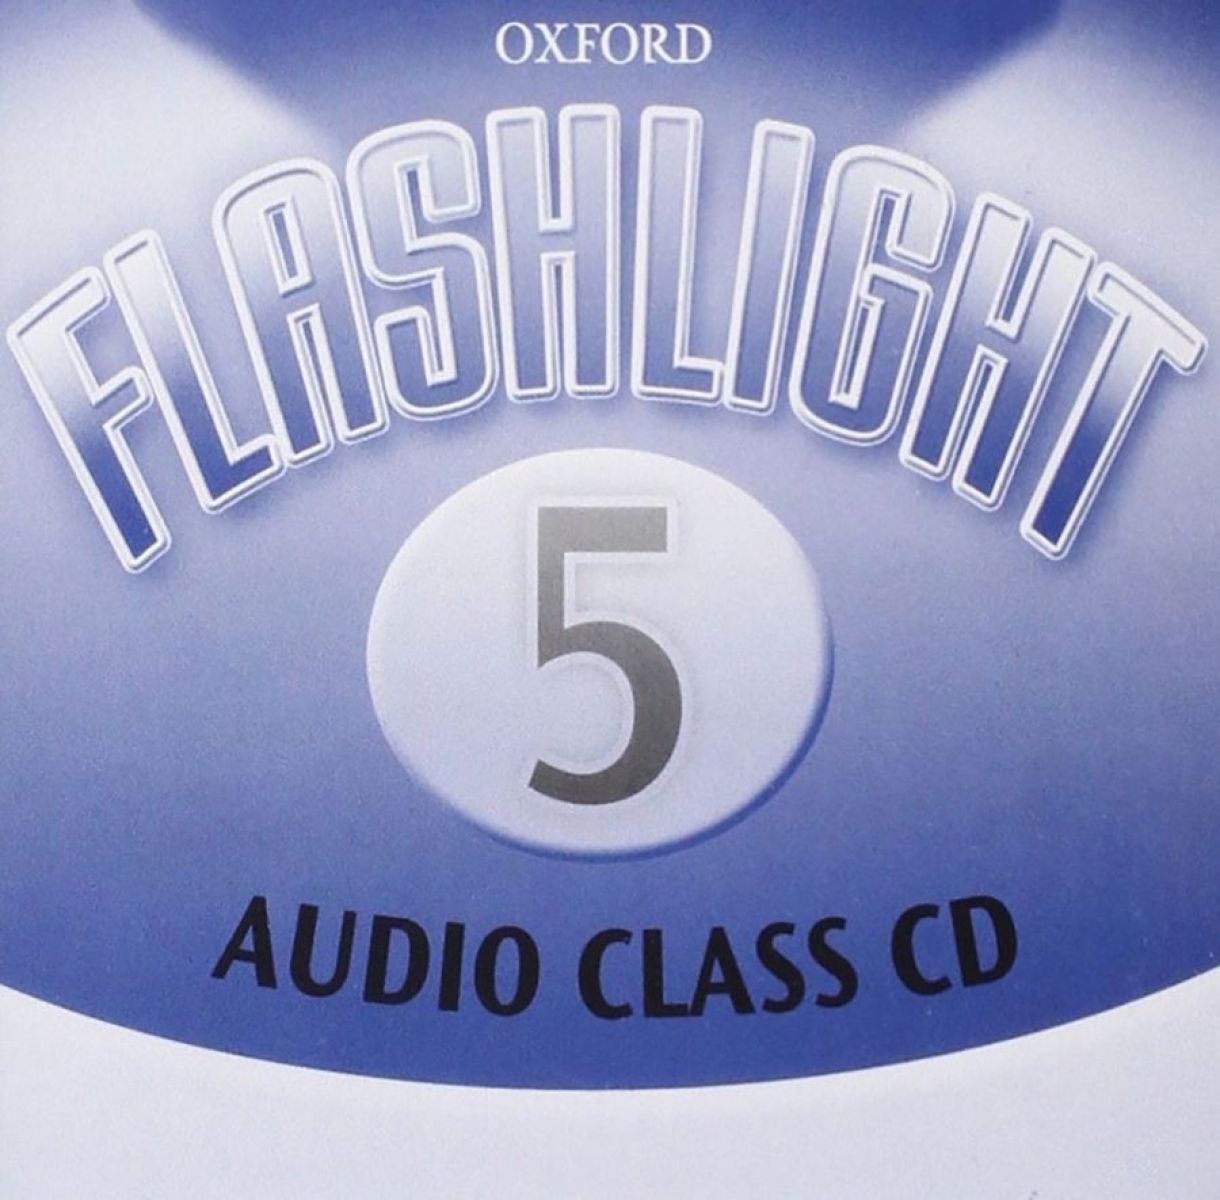 Paul Davies and Tim Falla Flashlight 5 Class Audio CD 